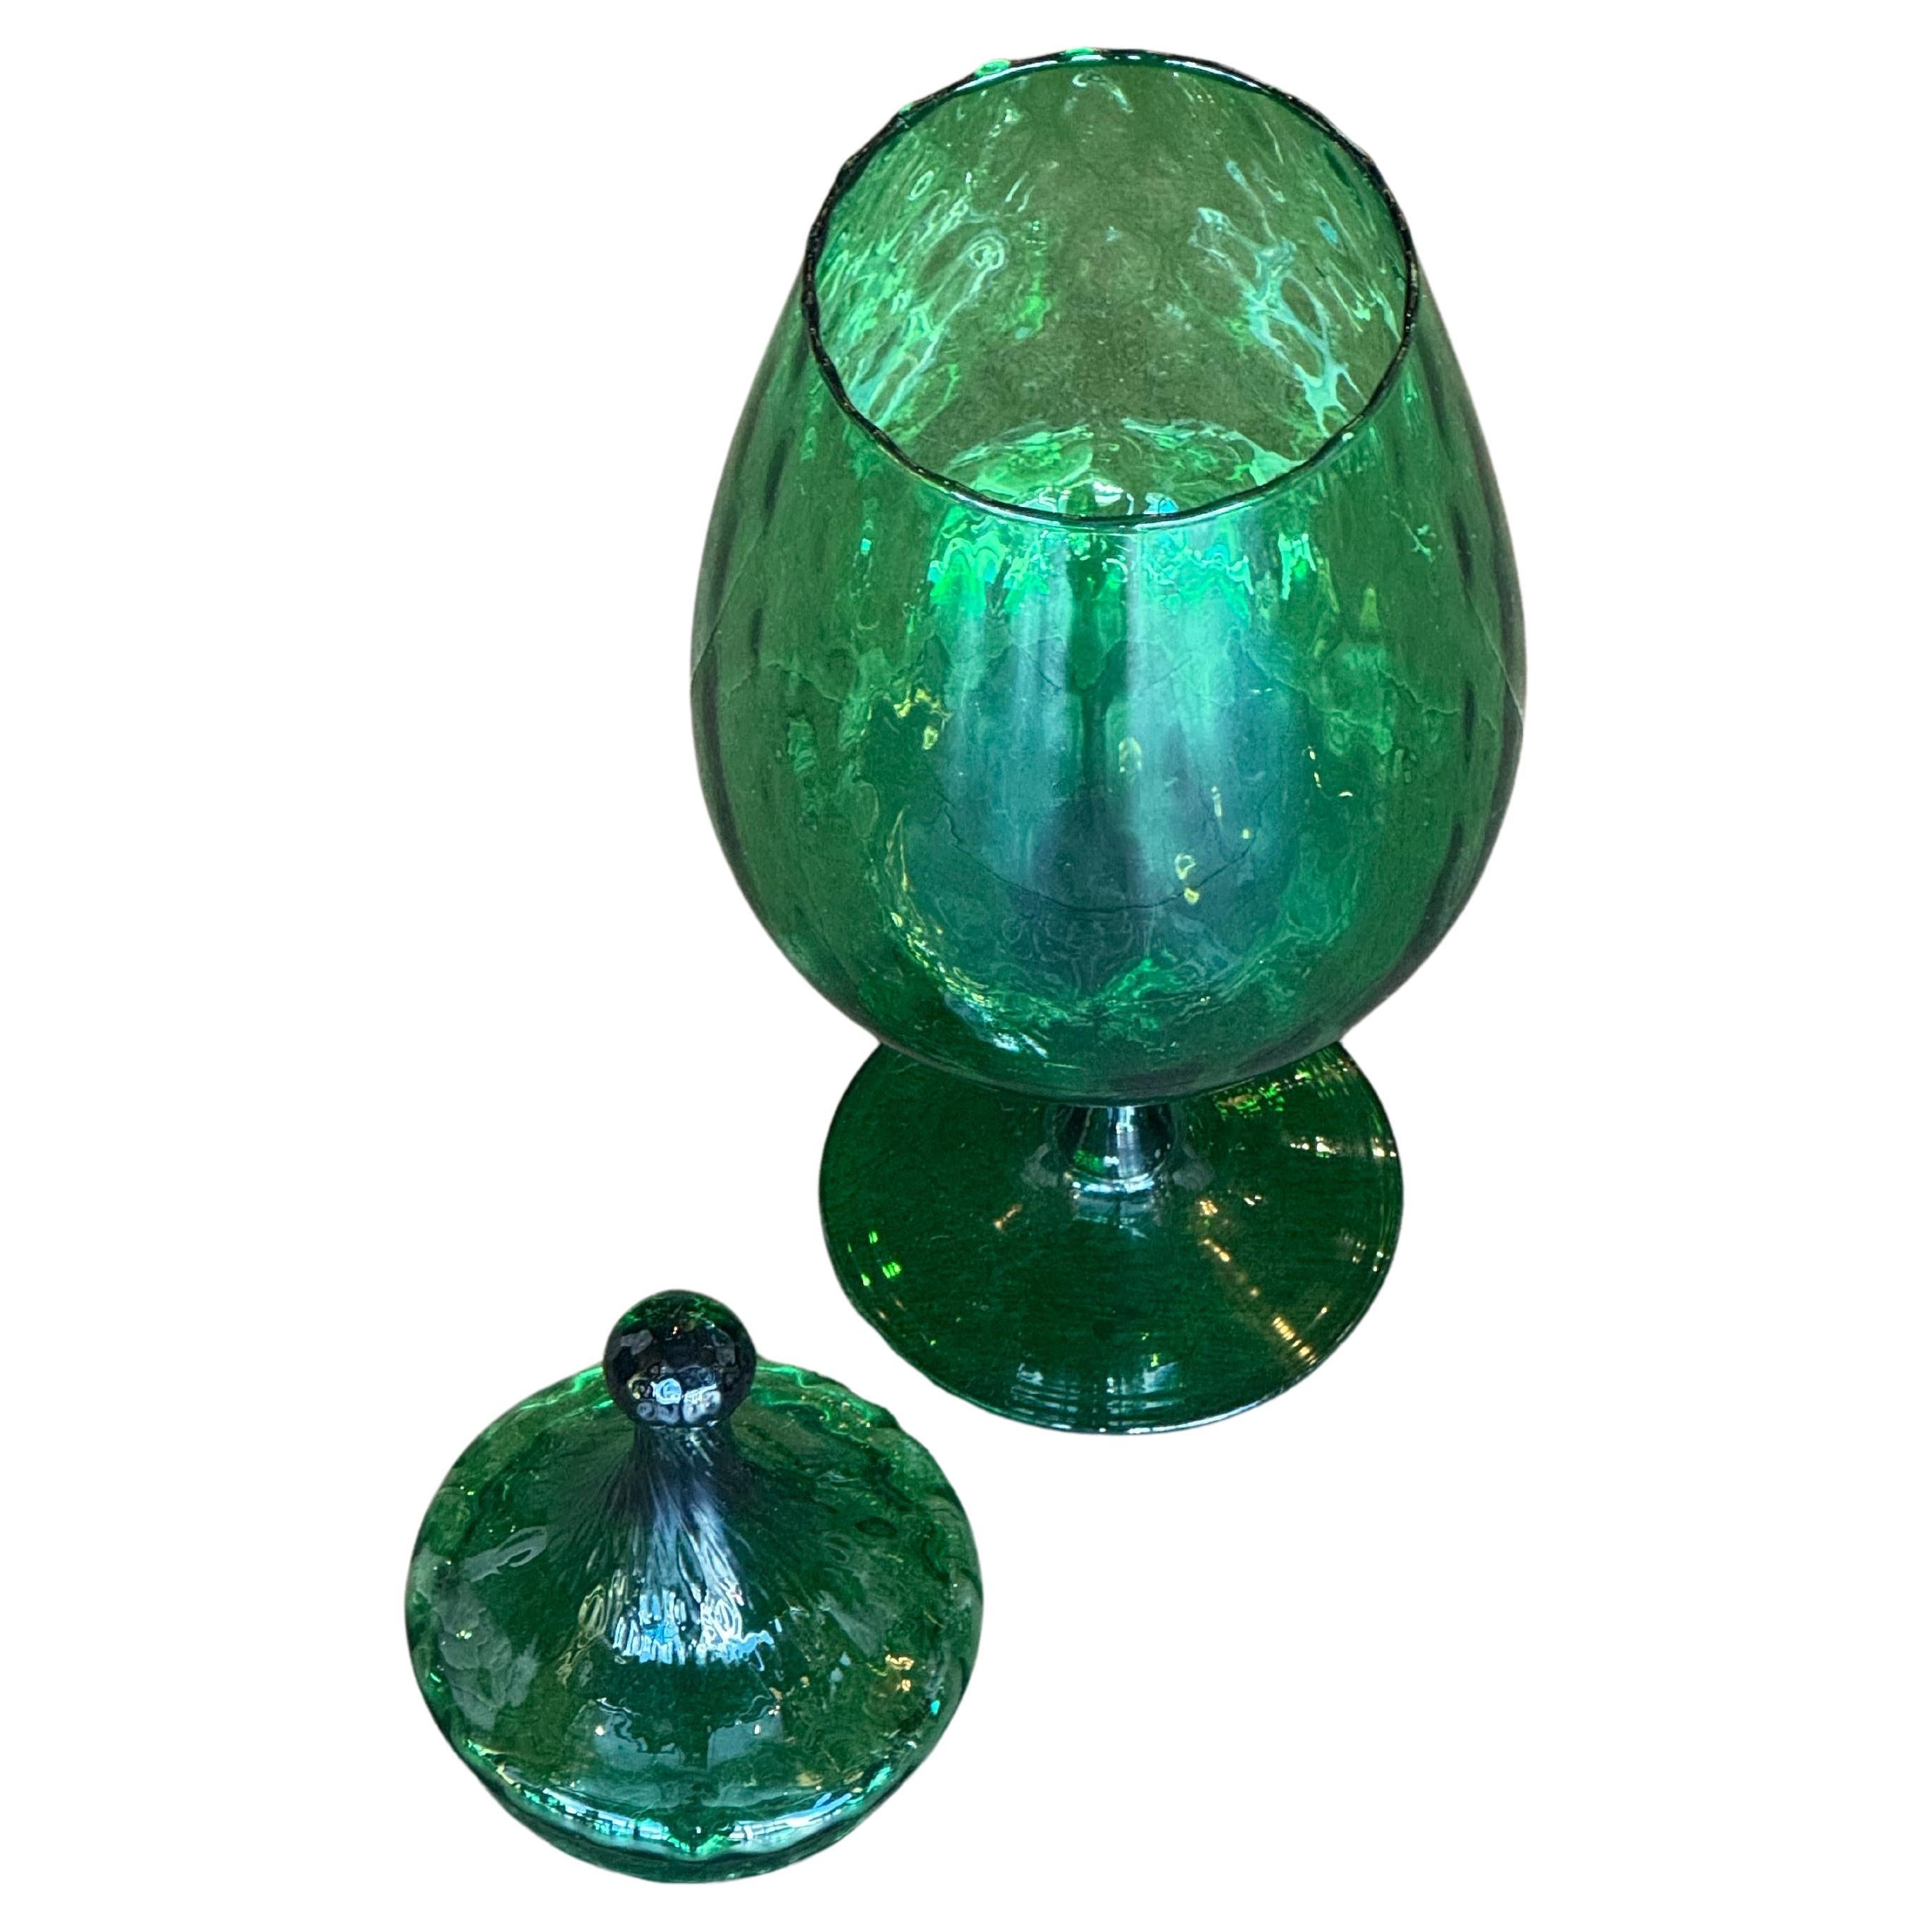 Smaragdgrüner mundgeblasener Glassockel mit Deckel
Aus Marokko von Martyn Lawrence Bullard



